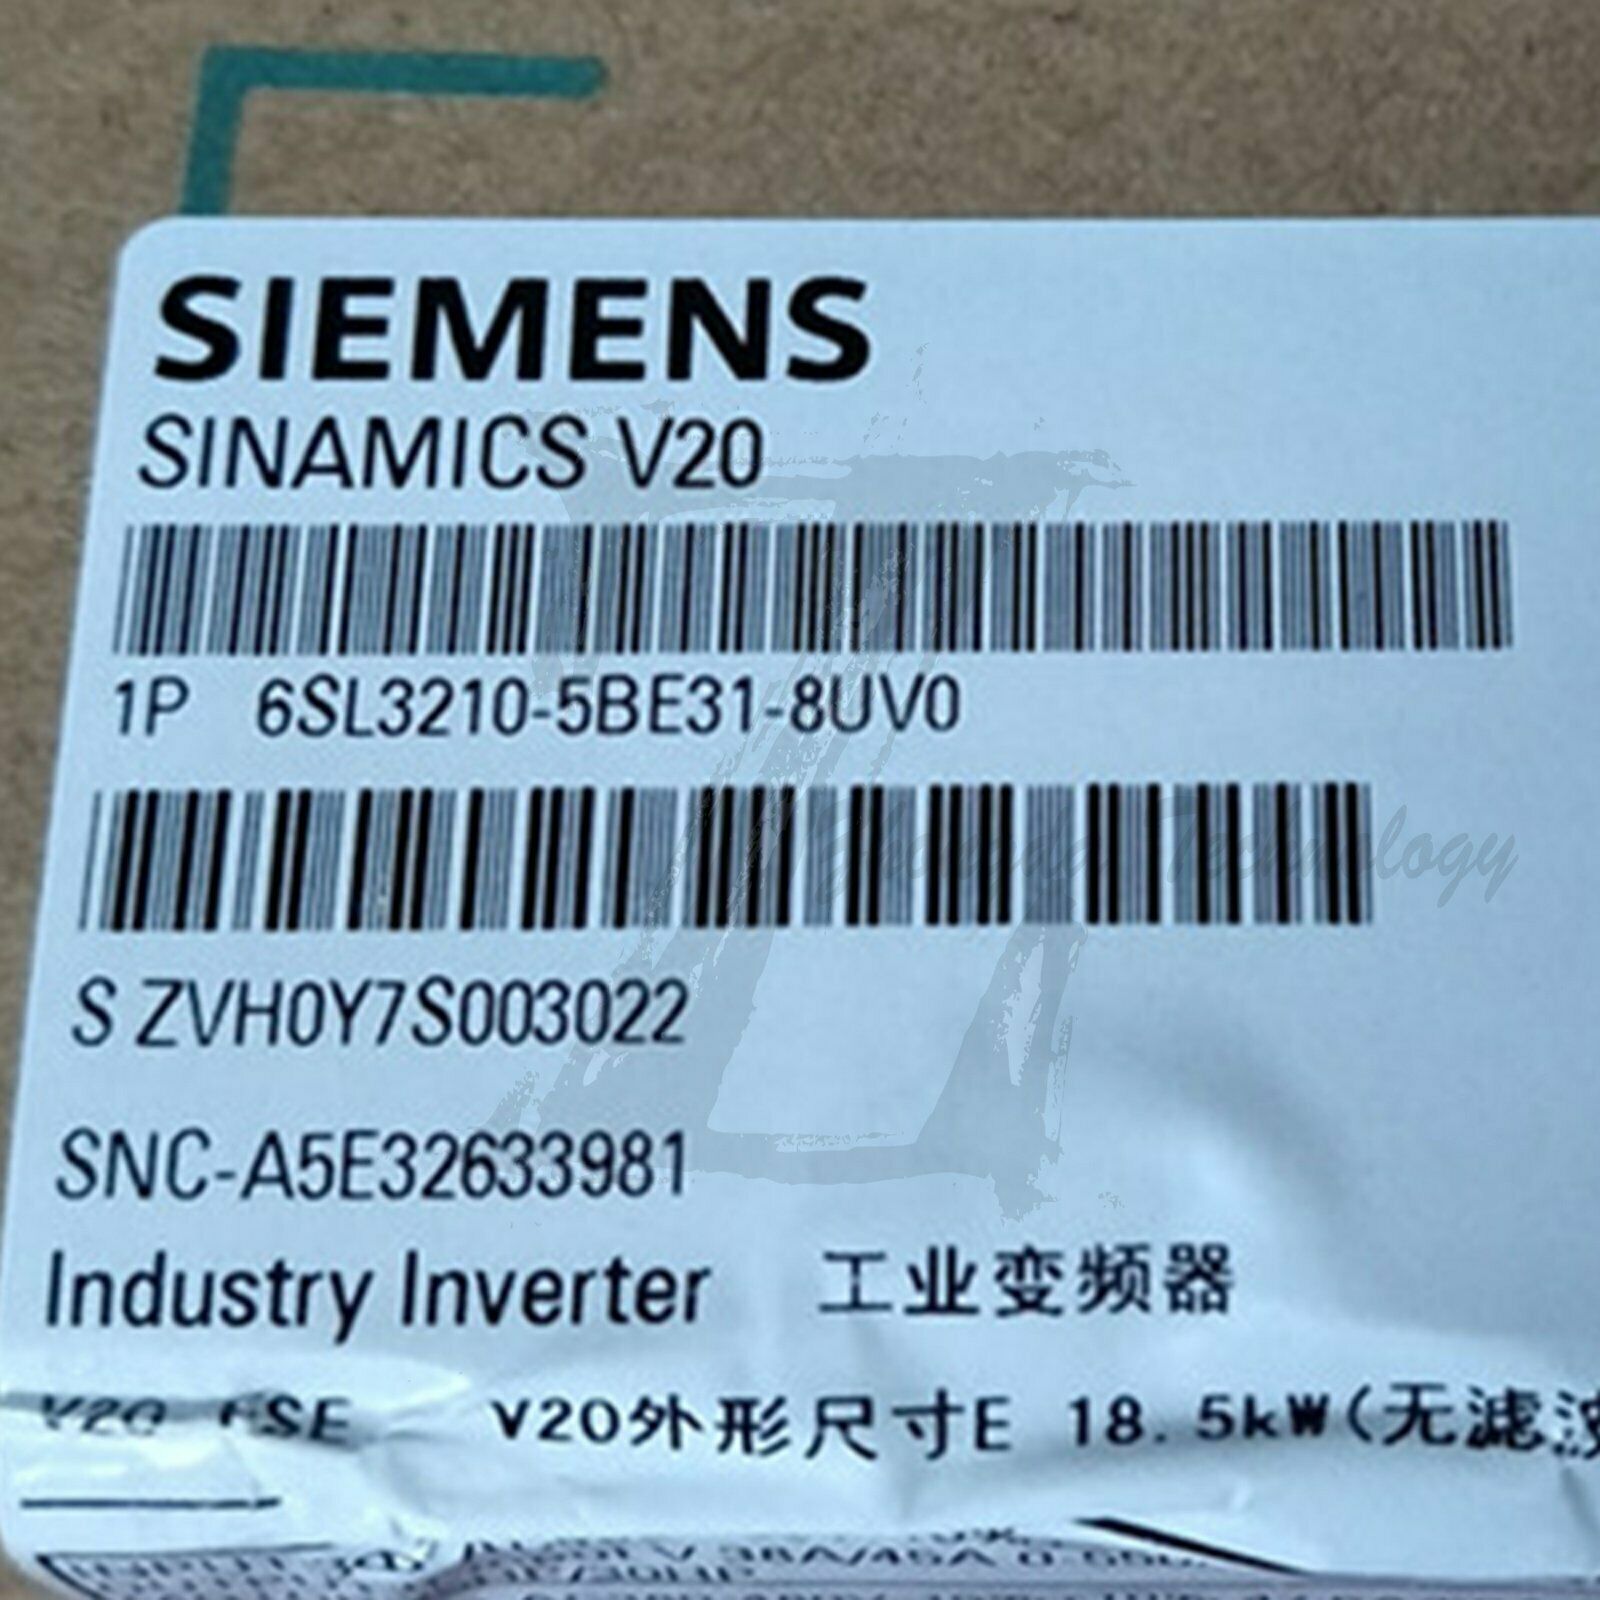 New Siemens inverter 6SL3210-5BE31-8UV0